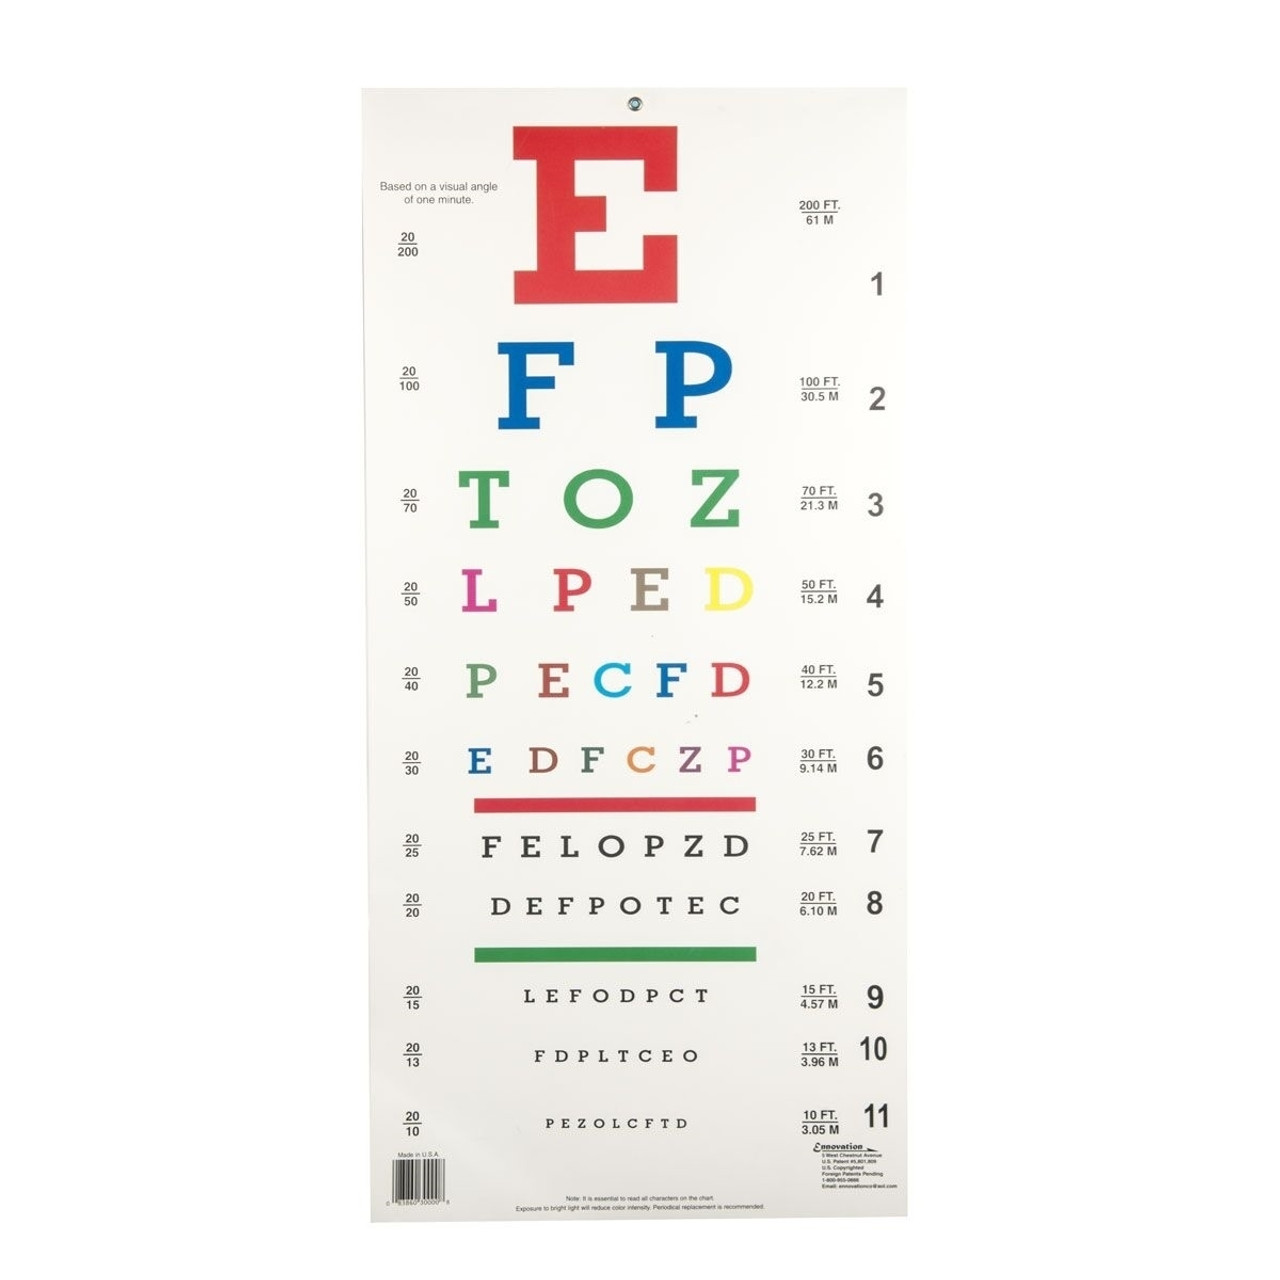 Waterproof Snellen Eye Chart Standard Visual Testing Acuity Chart Measure  Adults Kids Eye Vision Exam